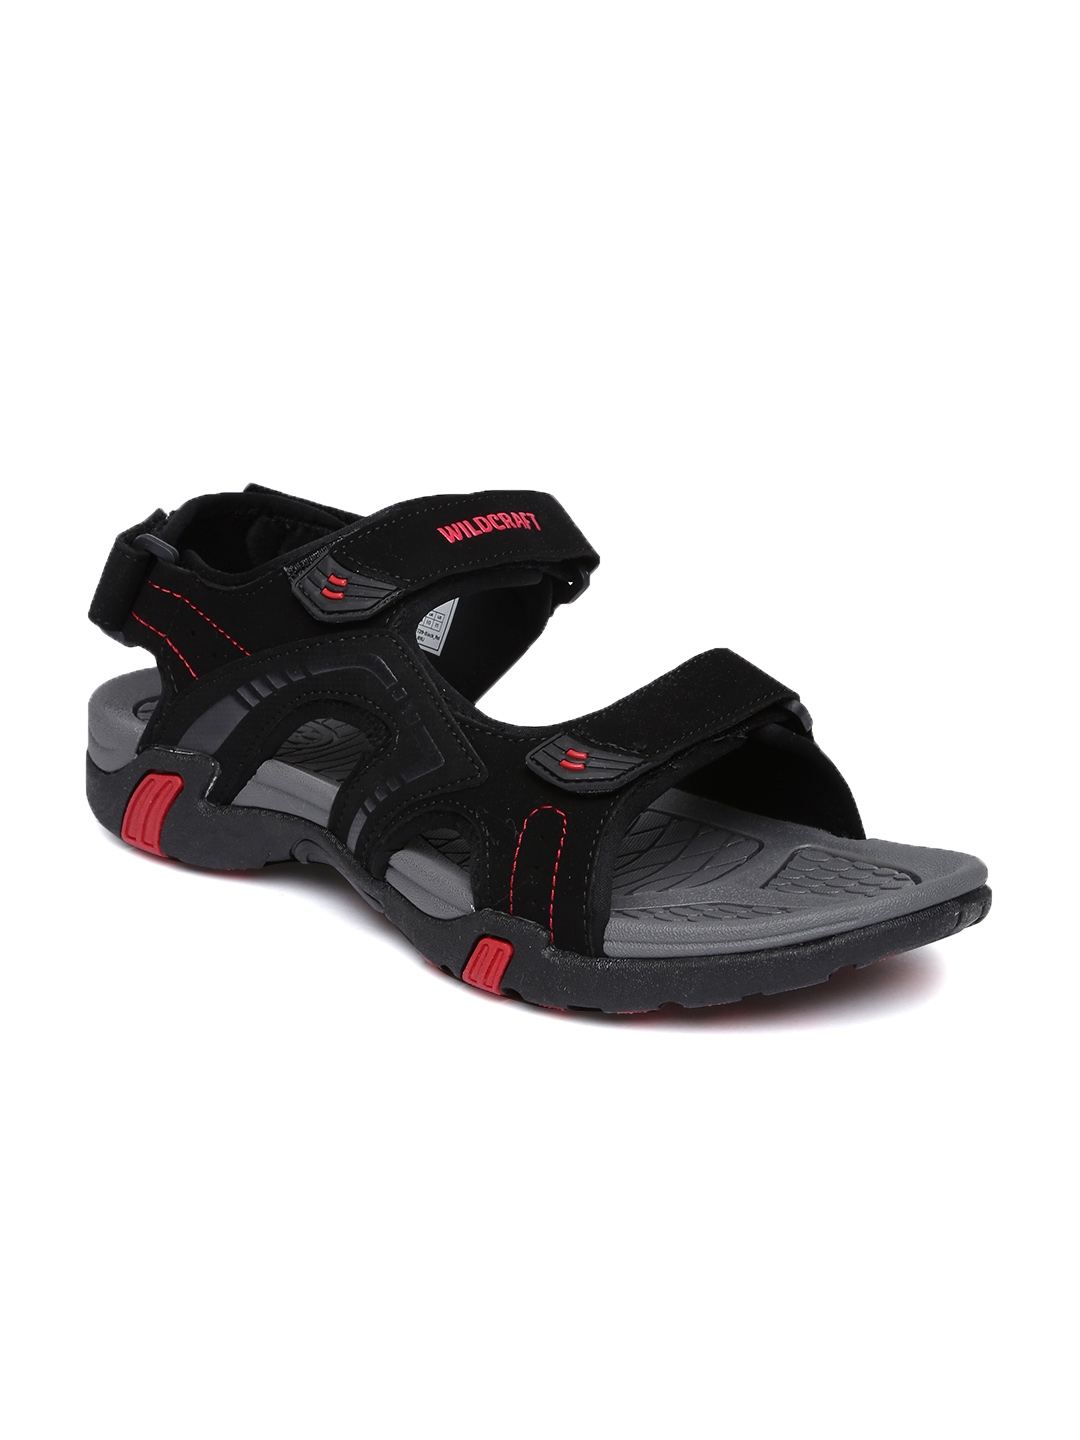 Buy Wildcraft Men Black Sports Sandals - Sports Sandals for Men 7760378 ...